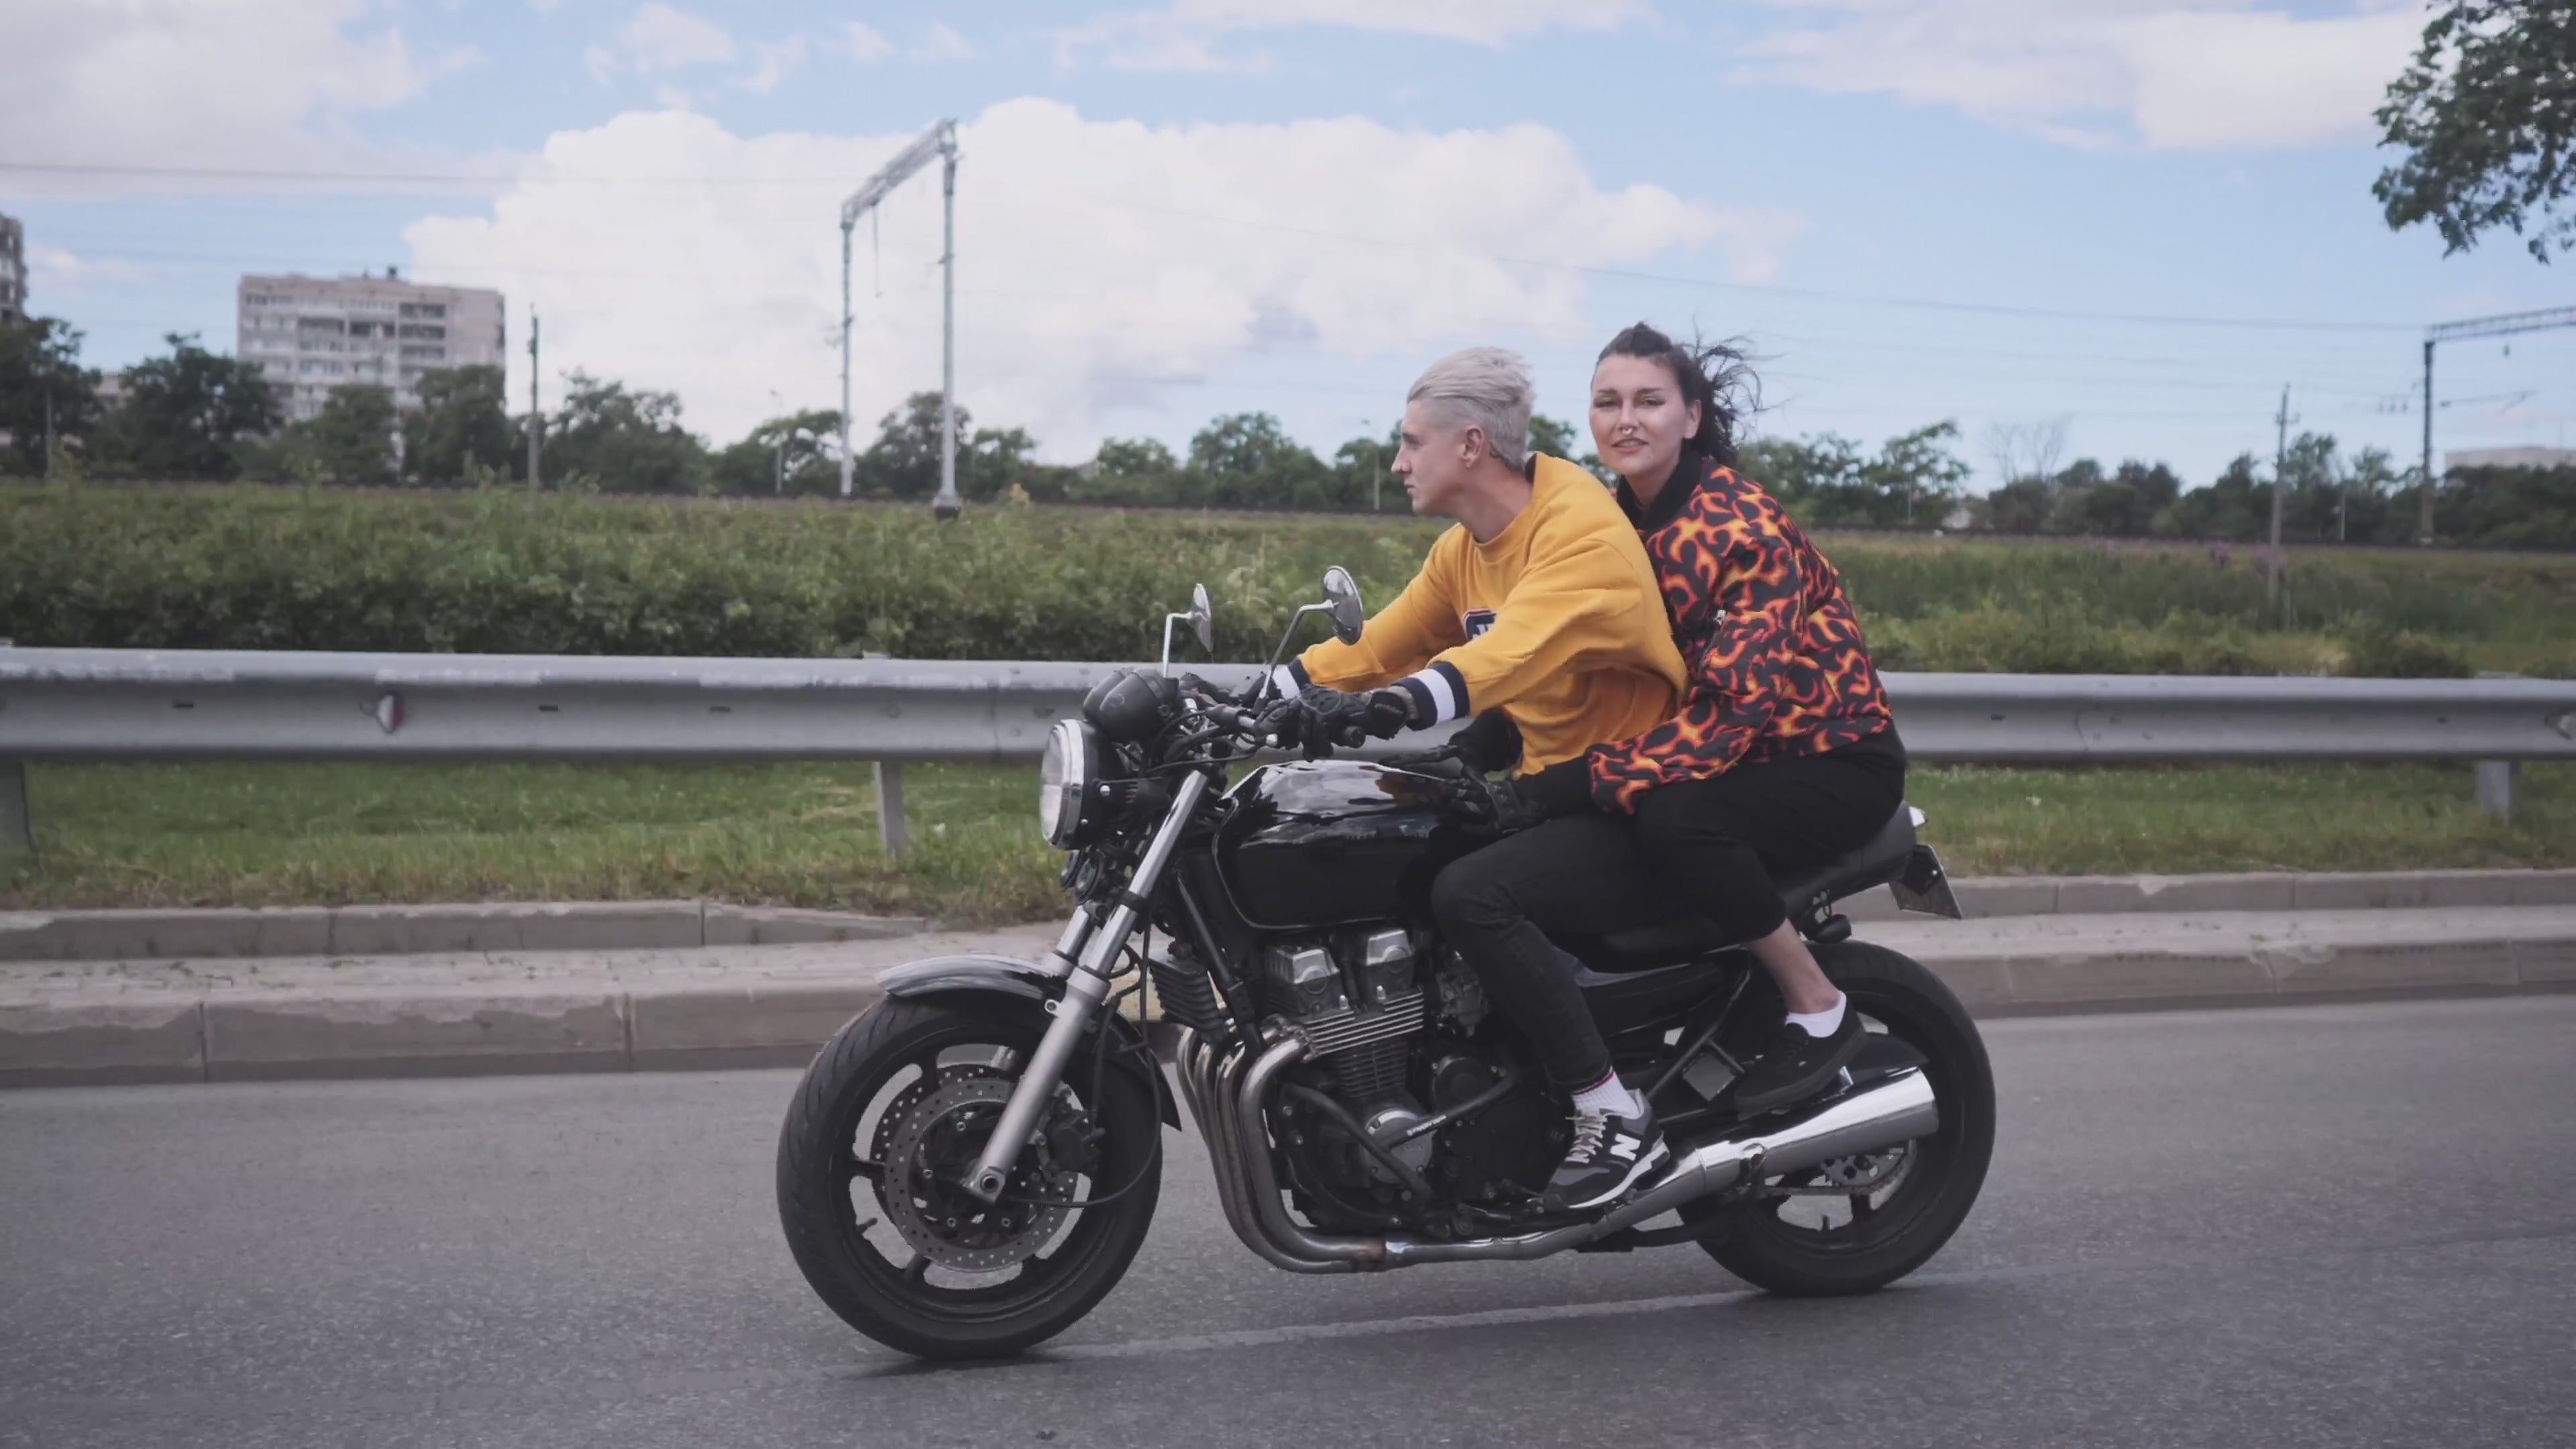 Video laden: Motorcycle-free-ride-wind-freedom-girl-boy